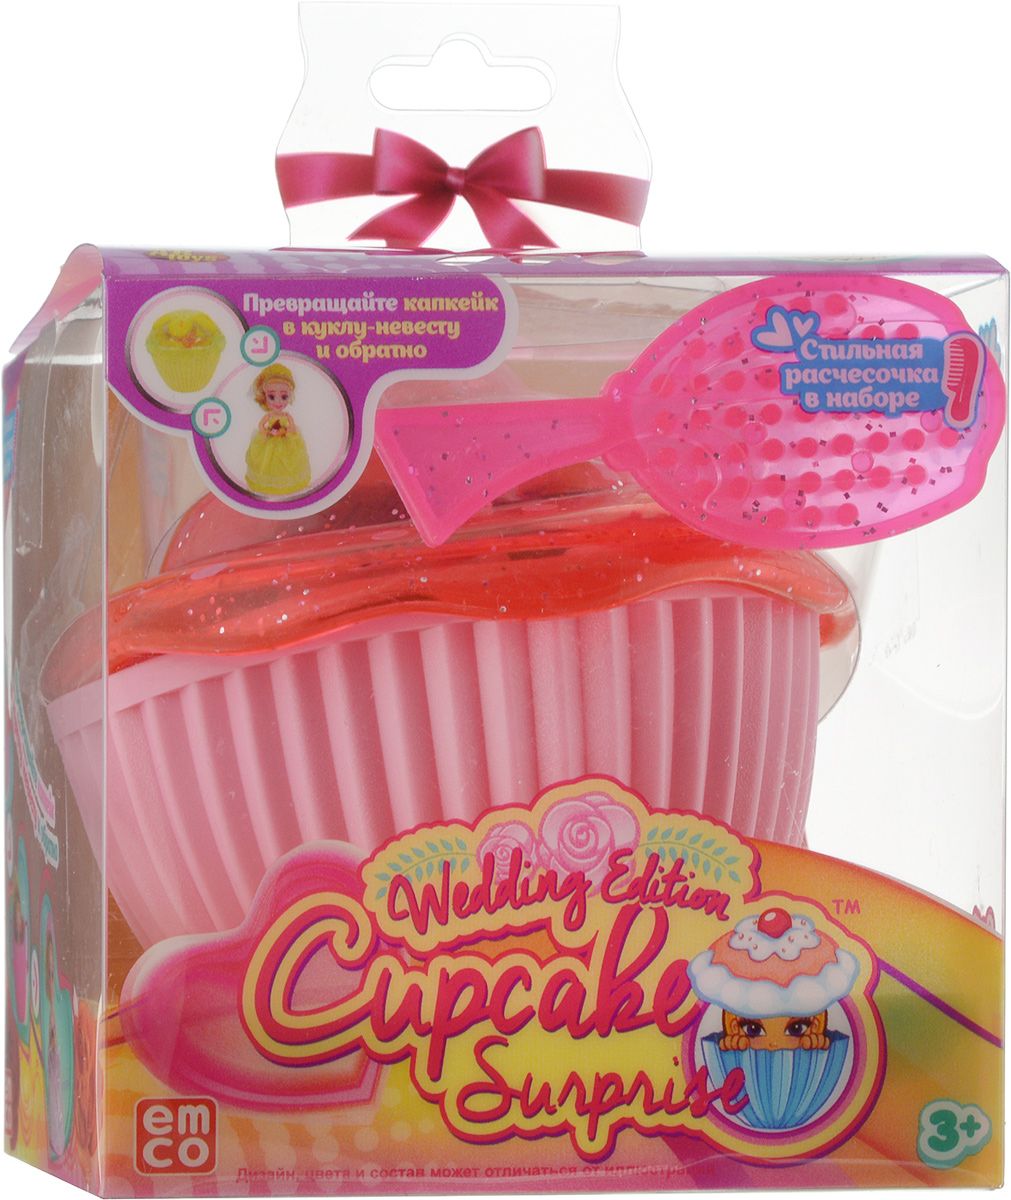 Emco - Cupcake Surprise   